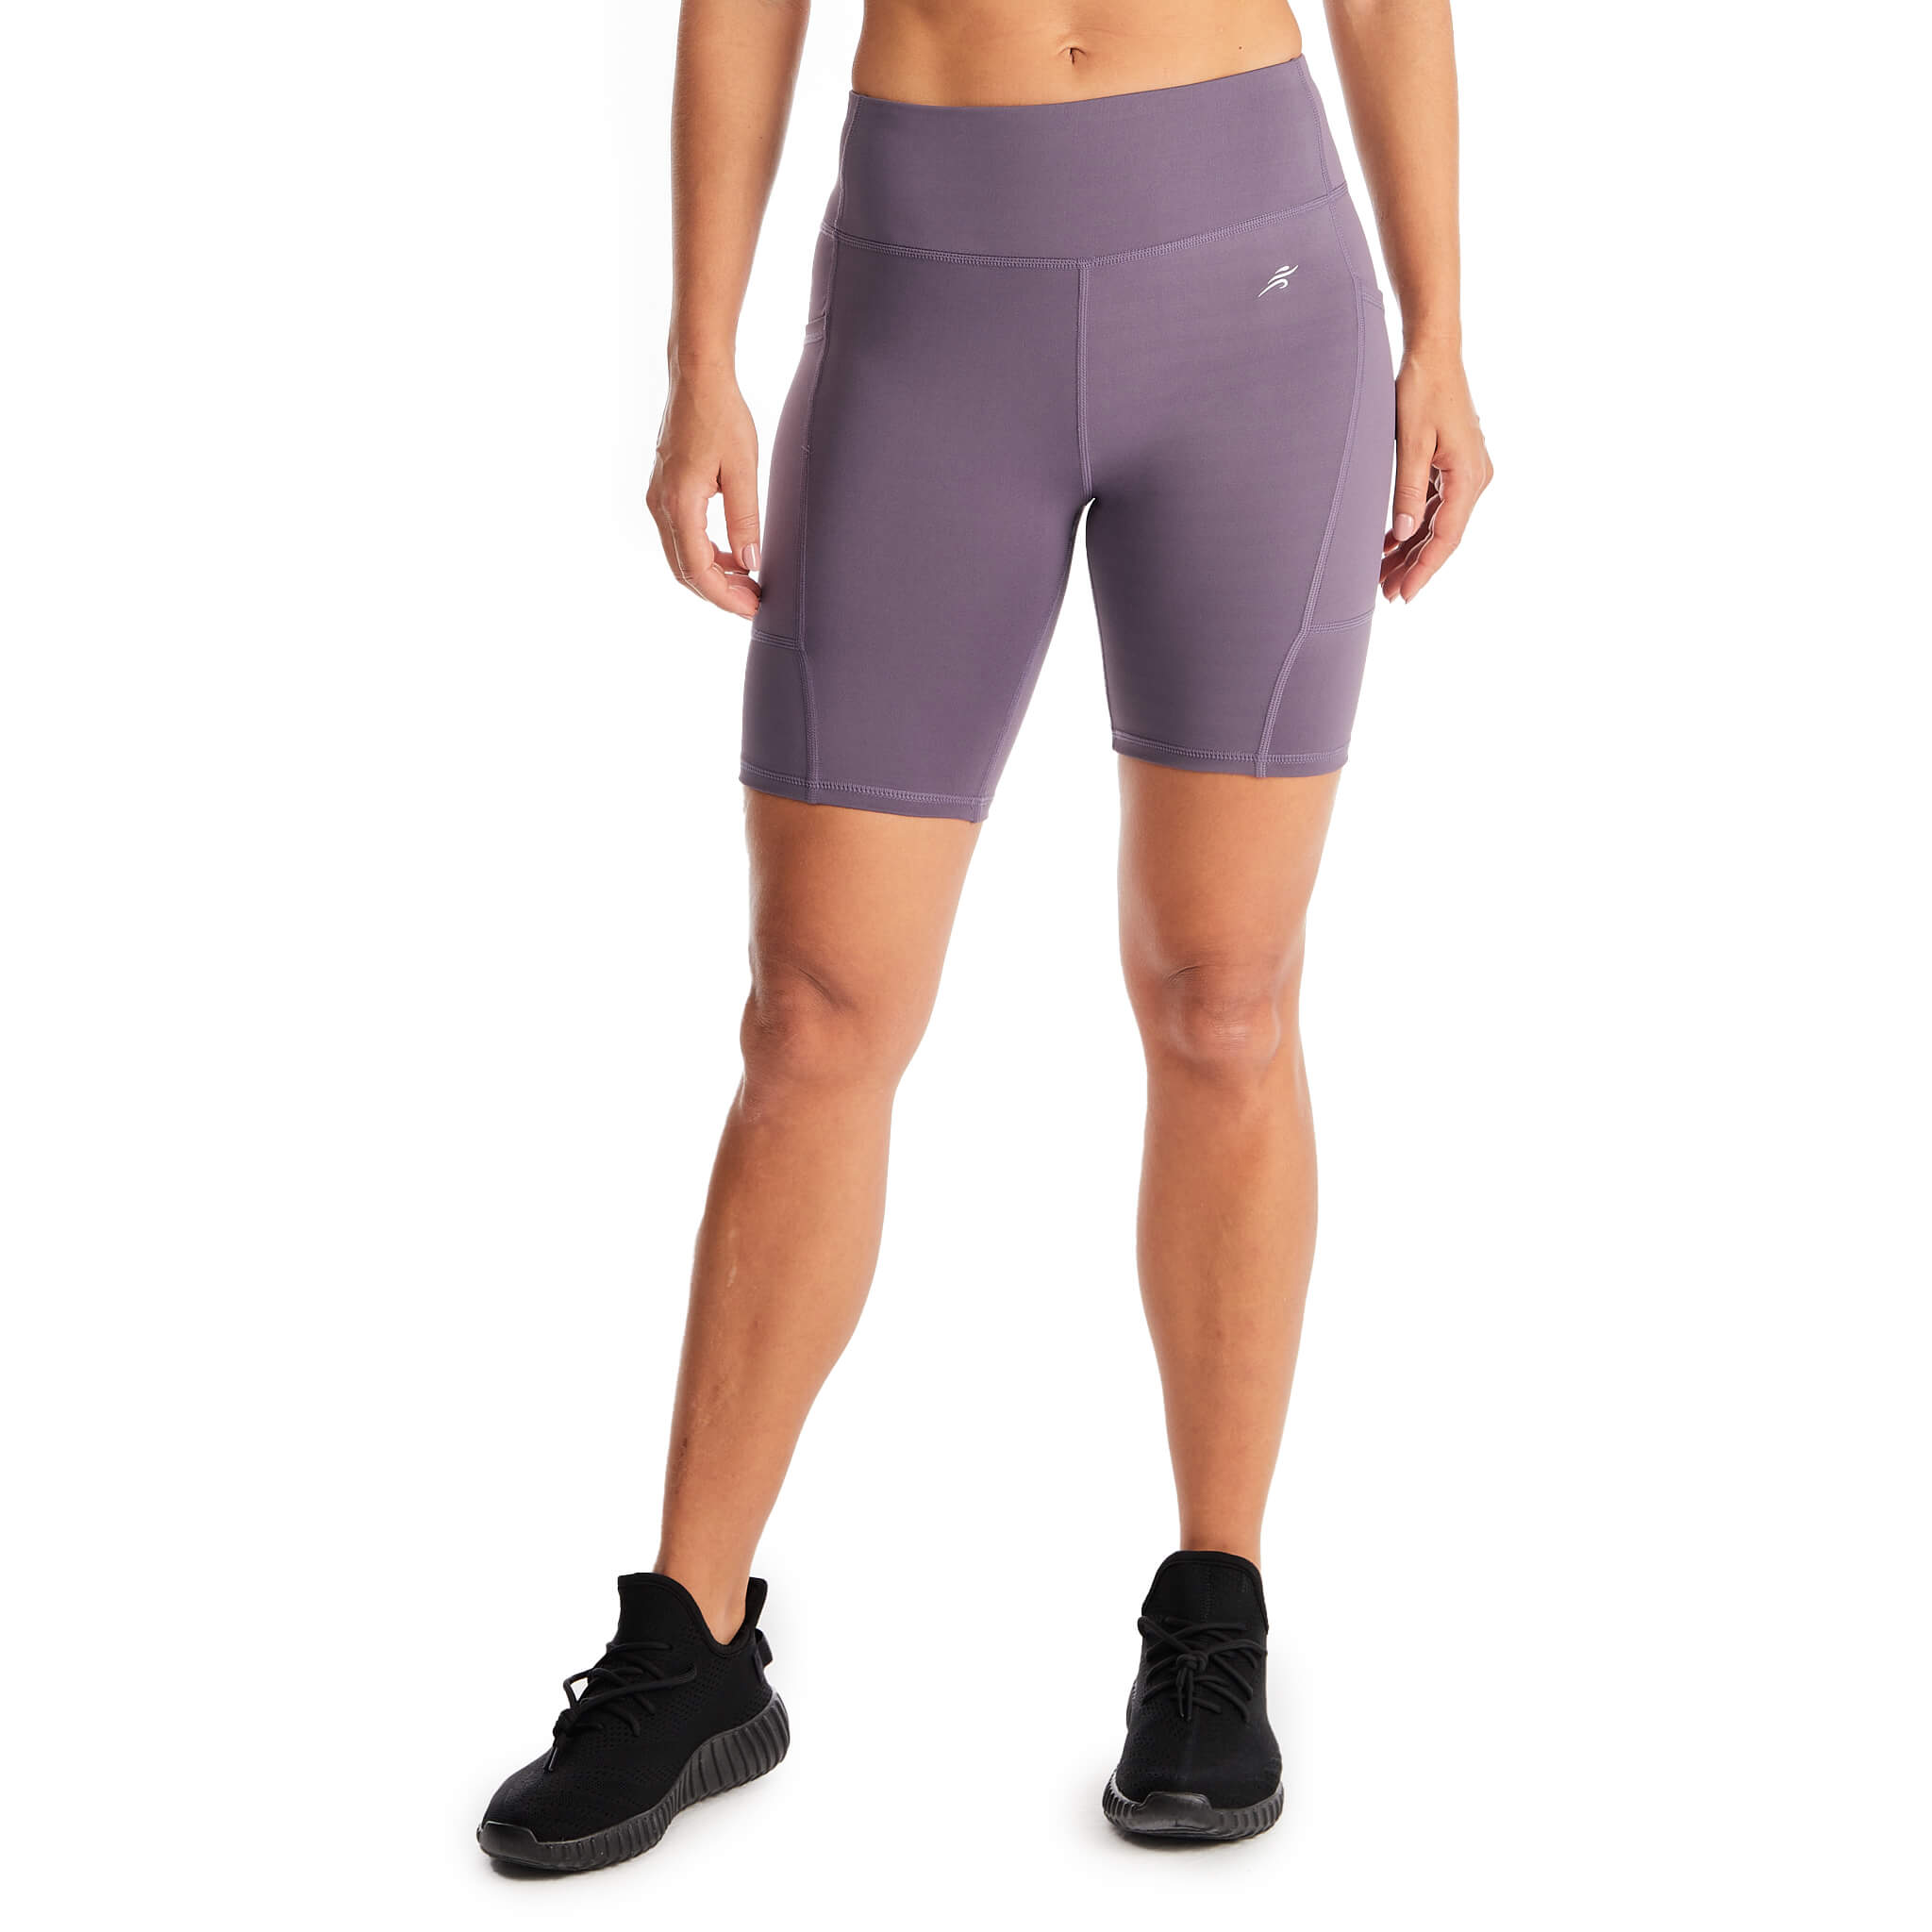 AL Biker Shorts- Dusty purple - Active Loom